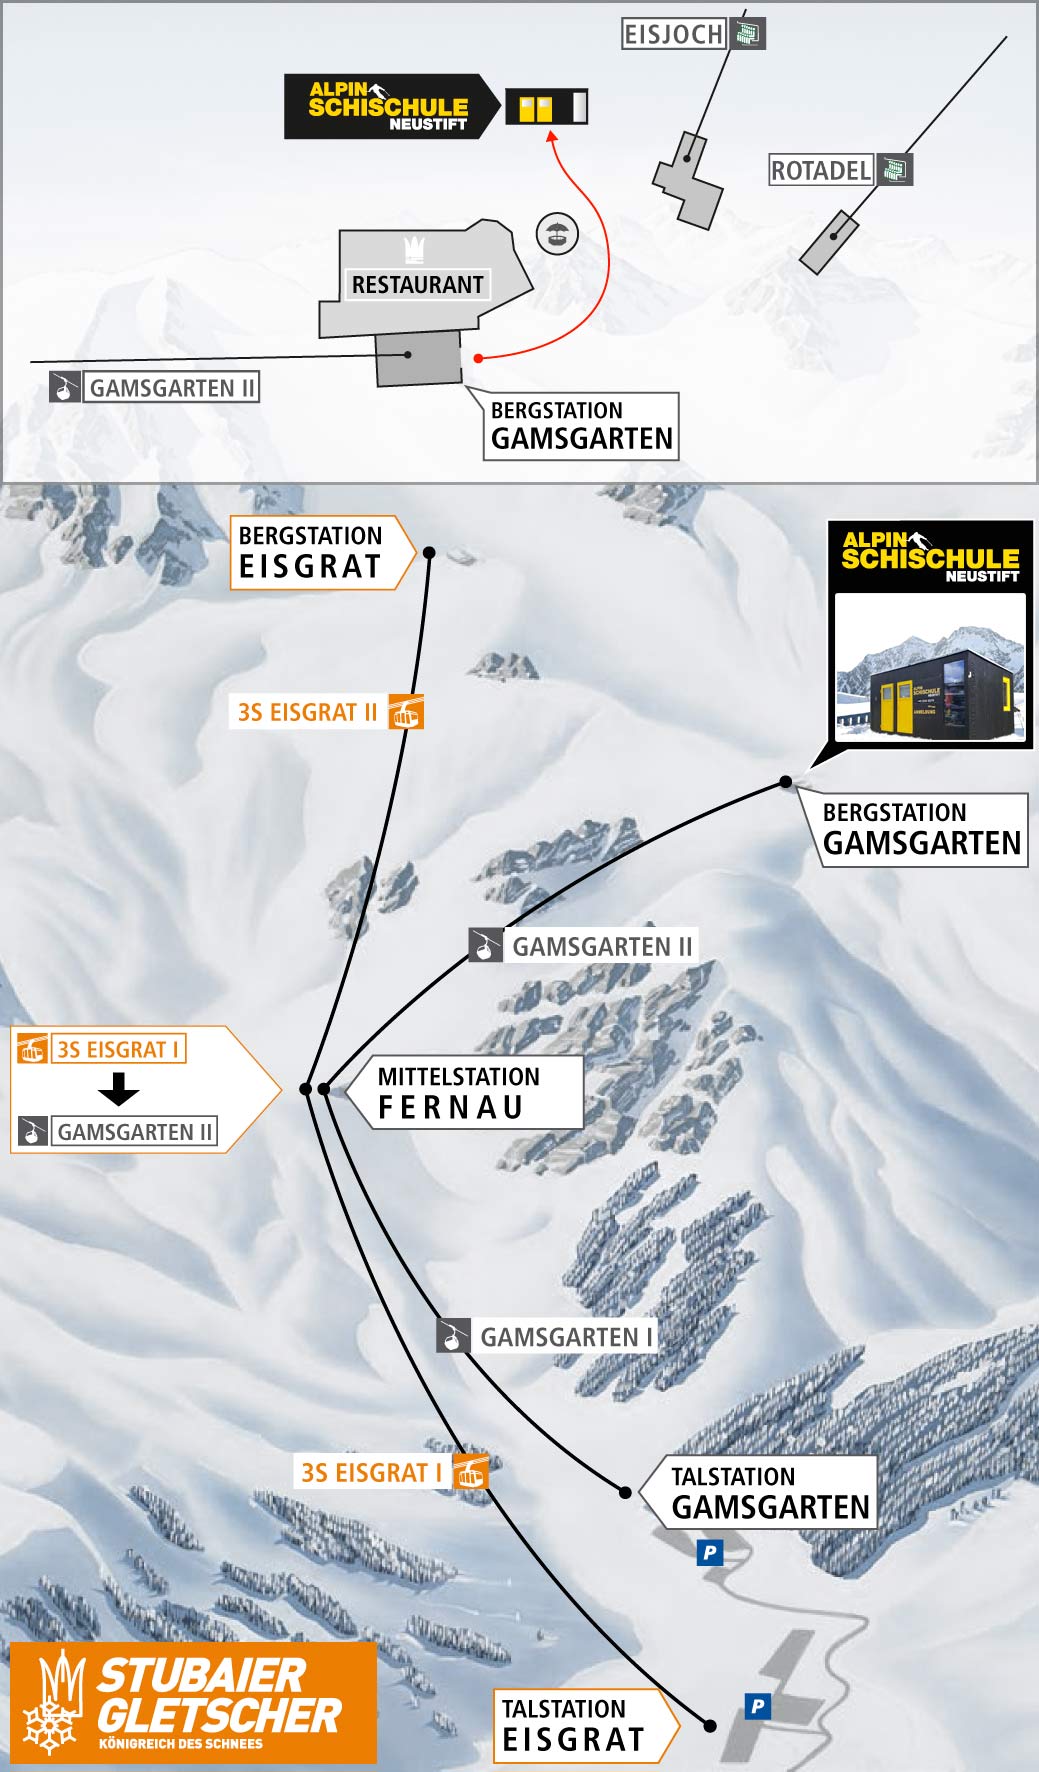 Alpin Ski School Neustift-office and meeting-point on the stubai glacier